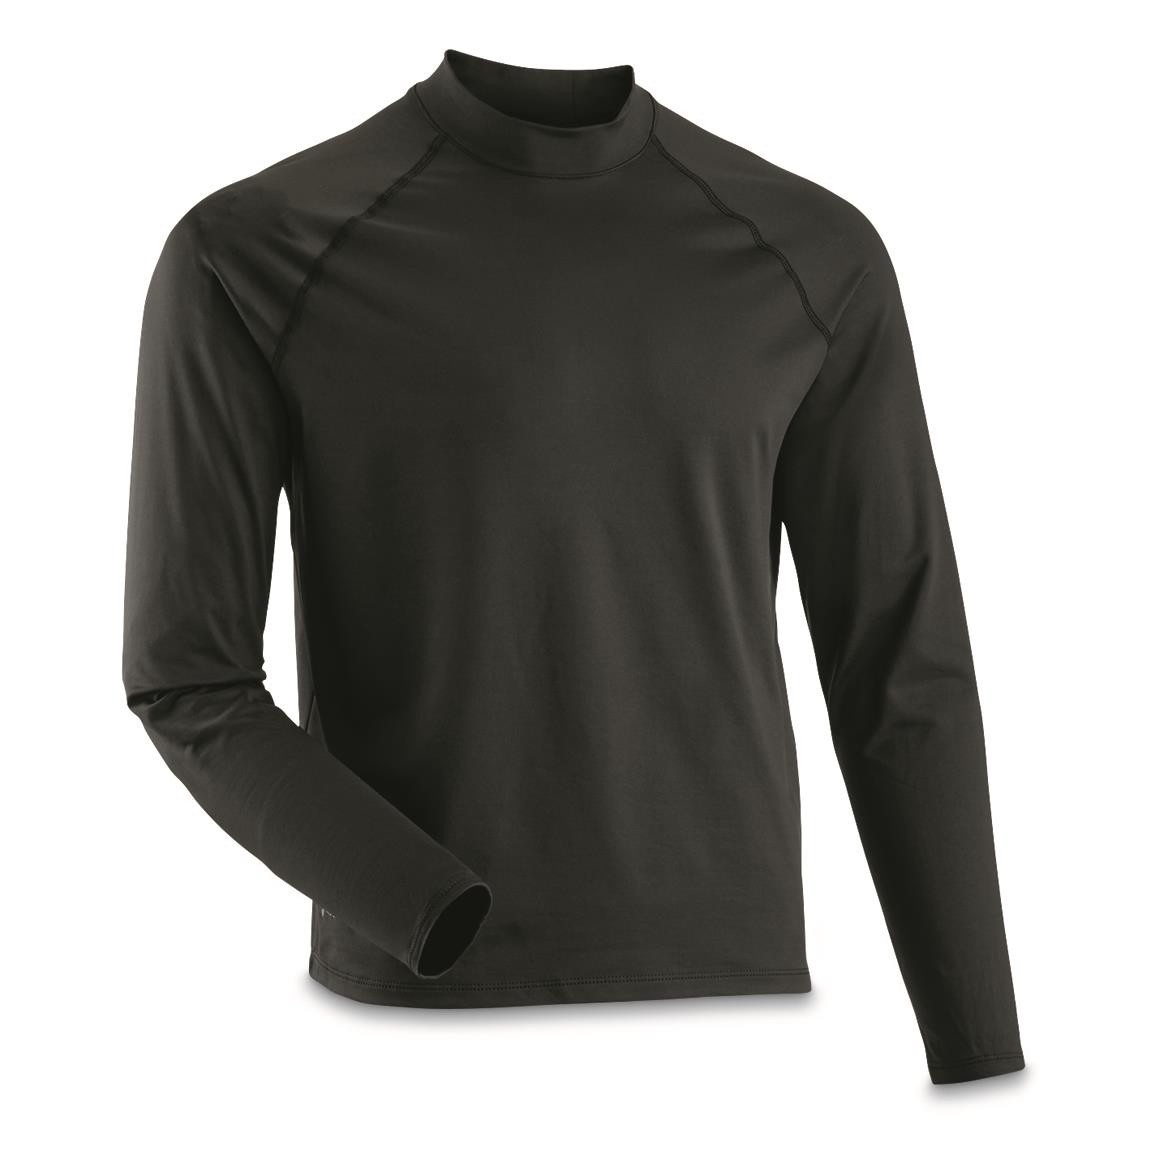 U.S. Military Surplus Bates Fleece Mock Neck Long Sleeve Shirt, New, Black